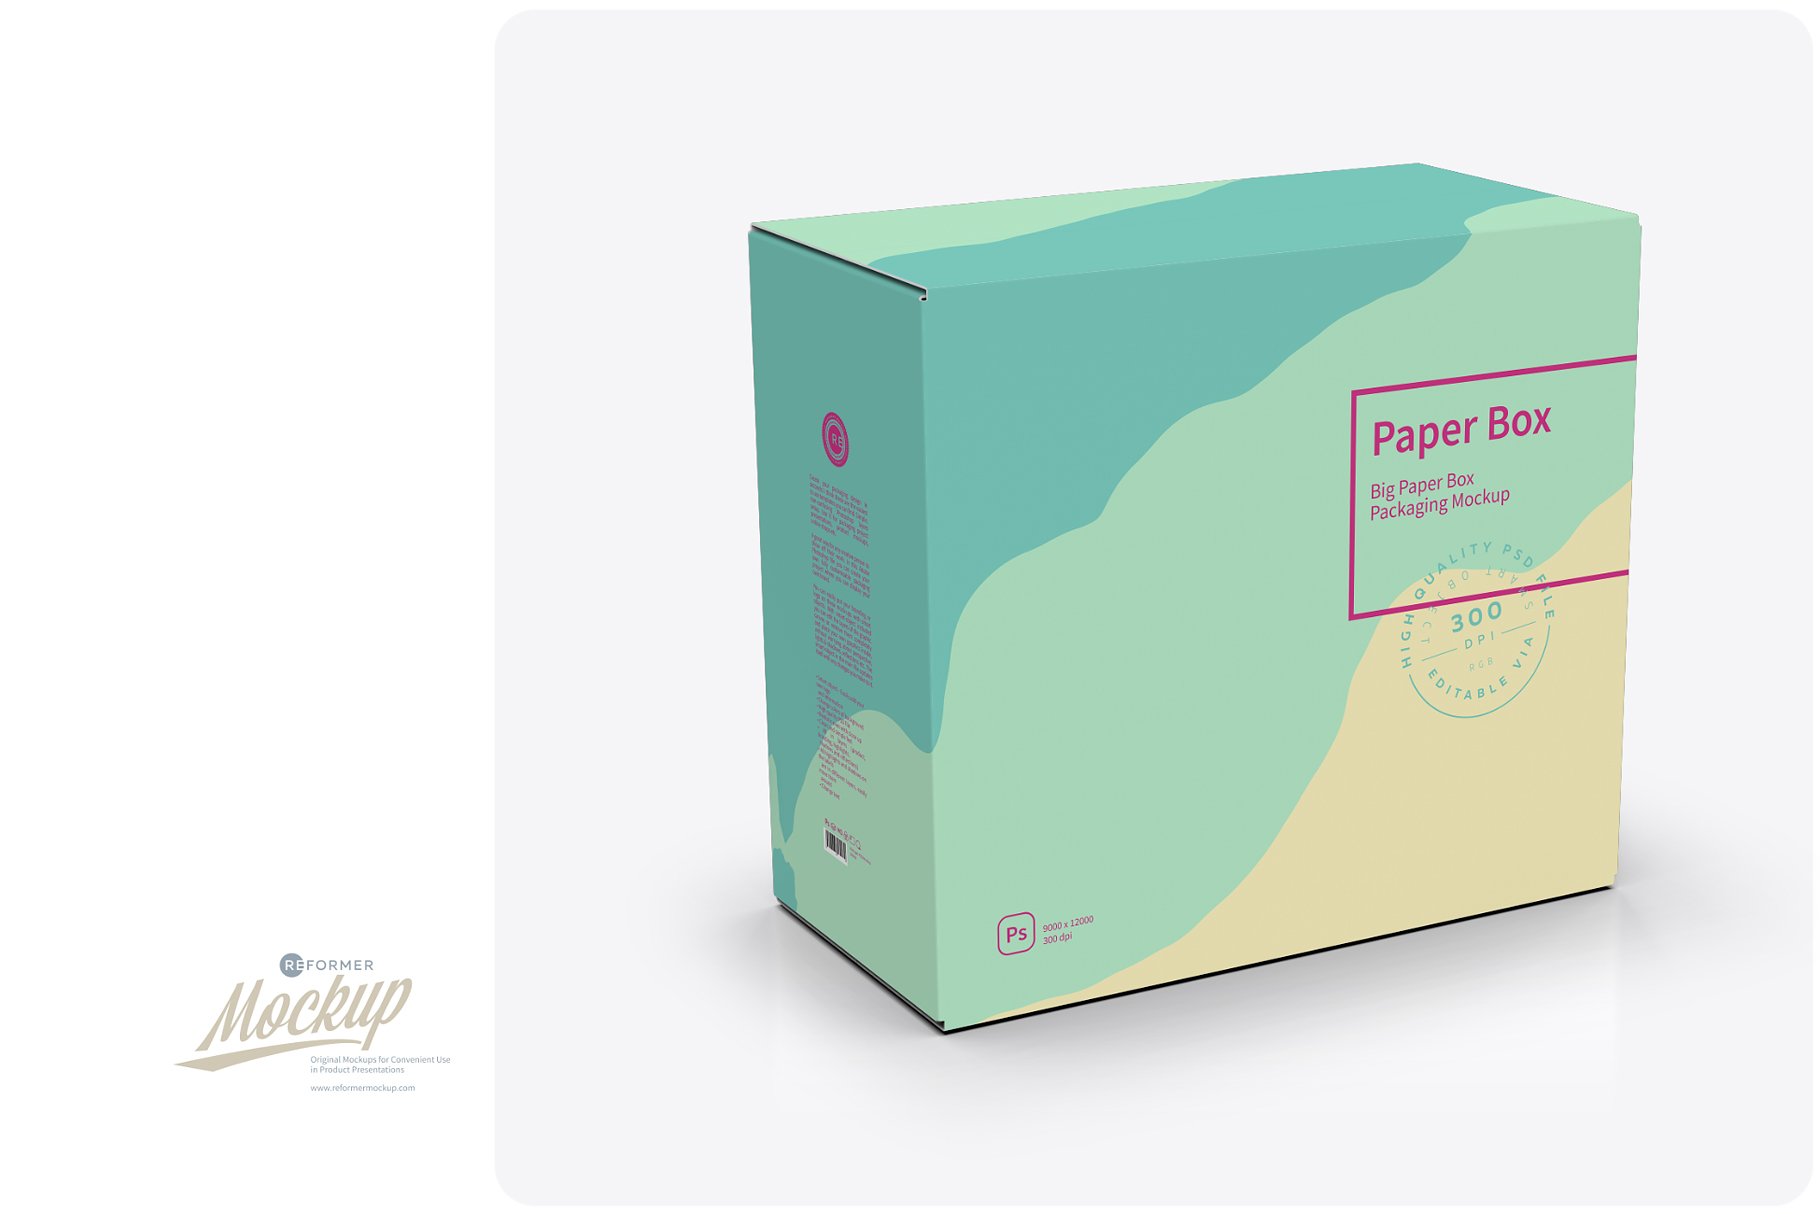 Paper Box Mockup cover image.